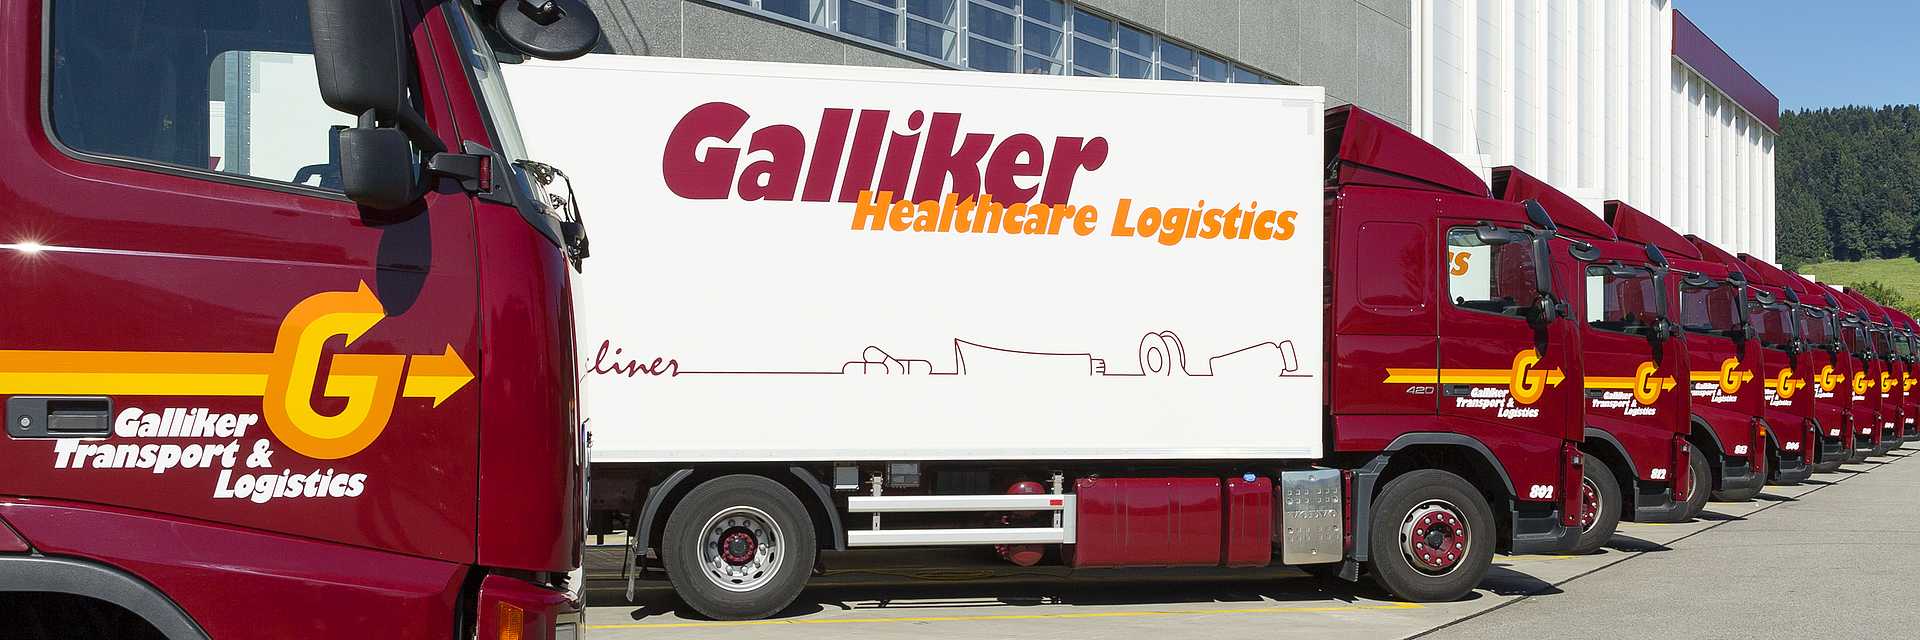 Galliker Transport Logistik TopPicture 085